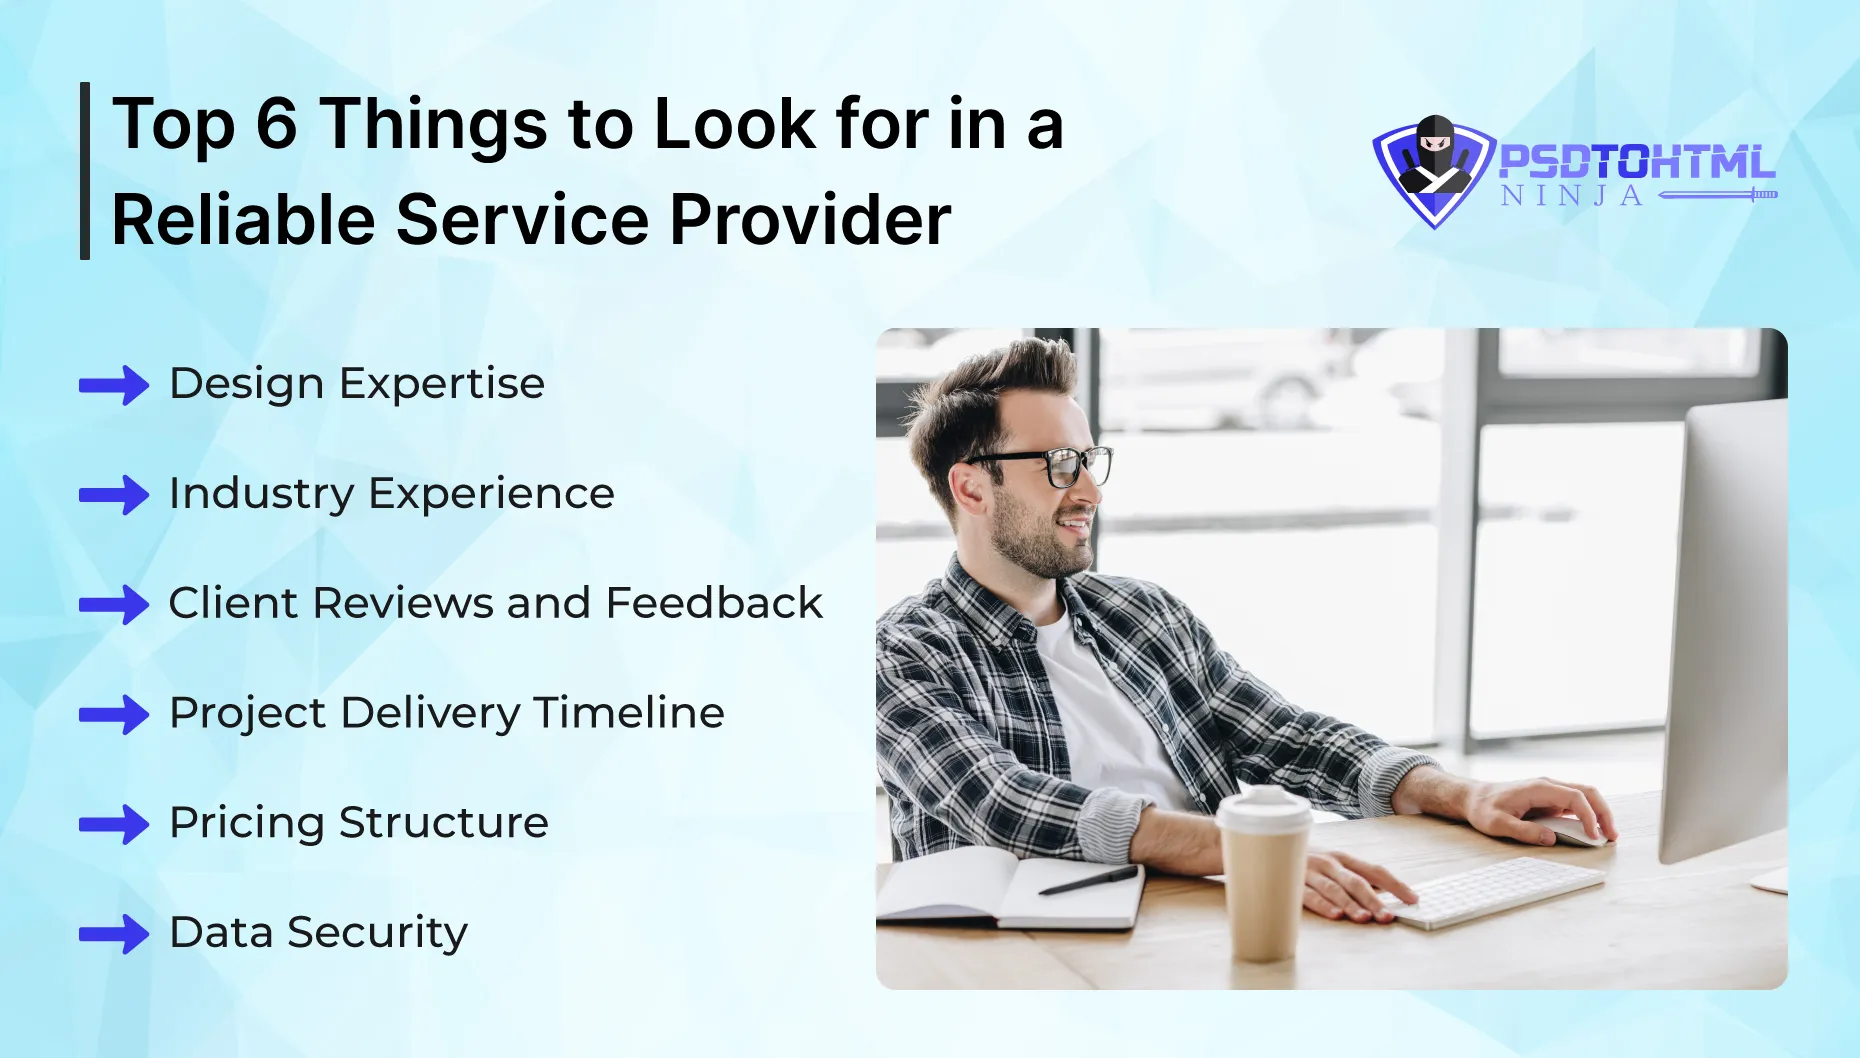 How do I choose a reliable service provider?